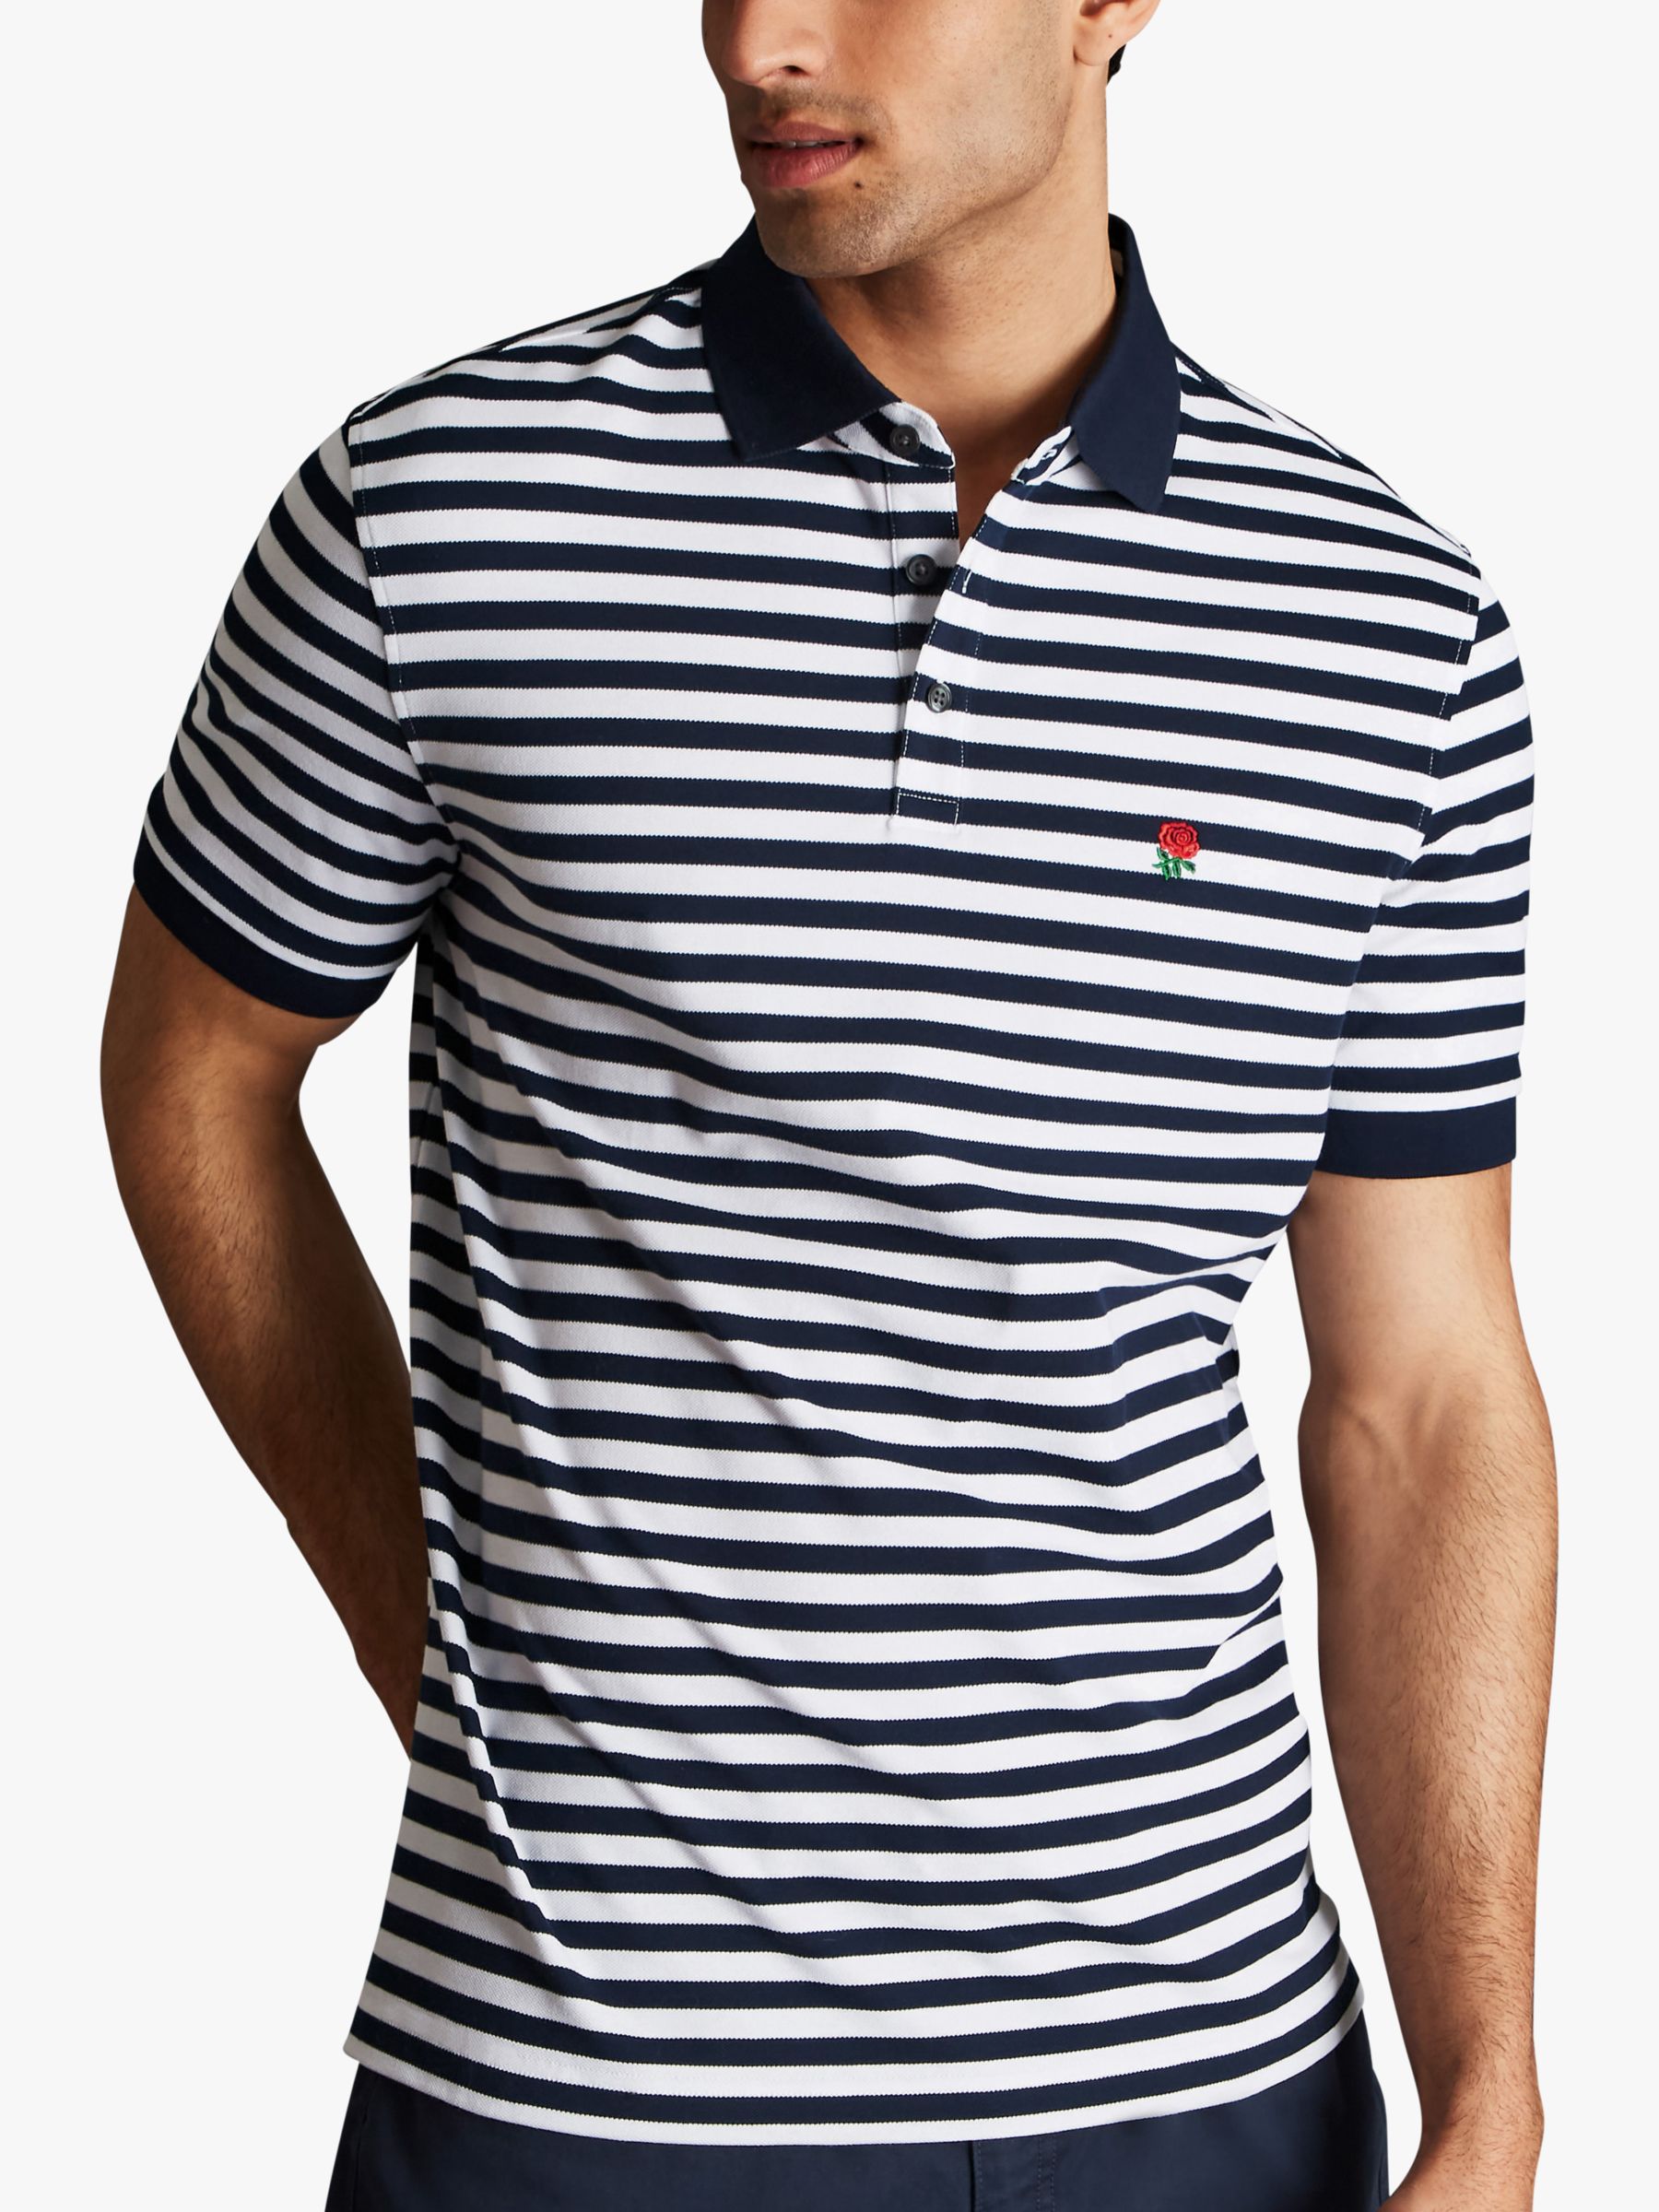 Charles Tyrwhitt England Rugby Stripe Pique Polo Shirt, Navy/White, S